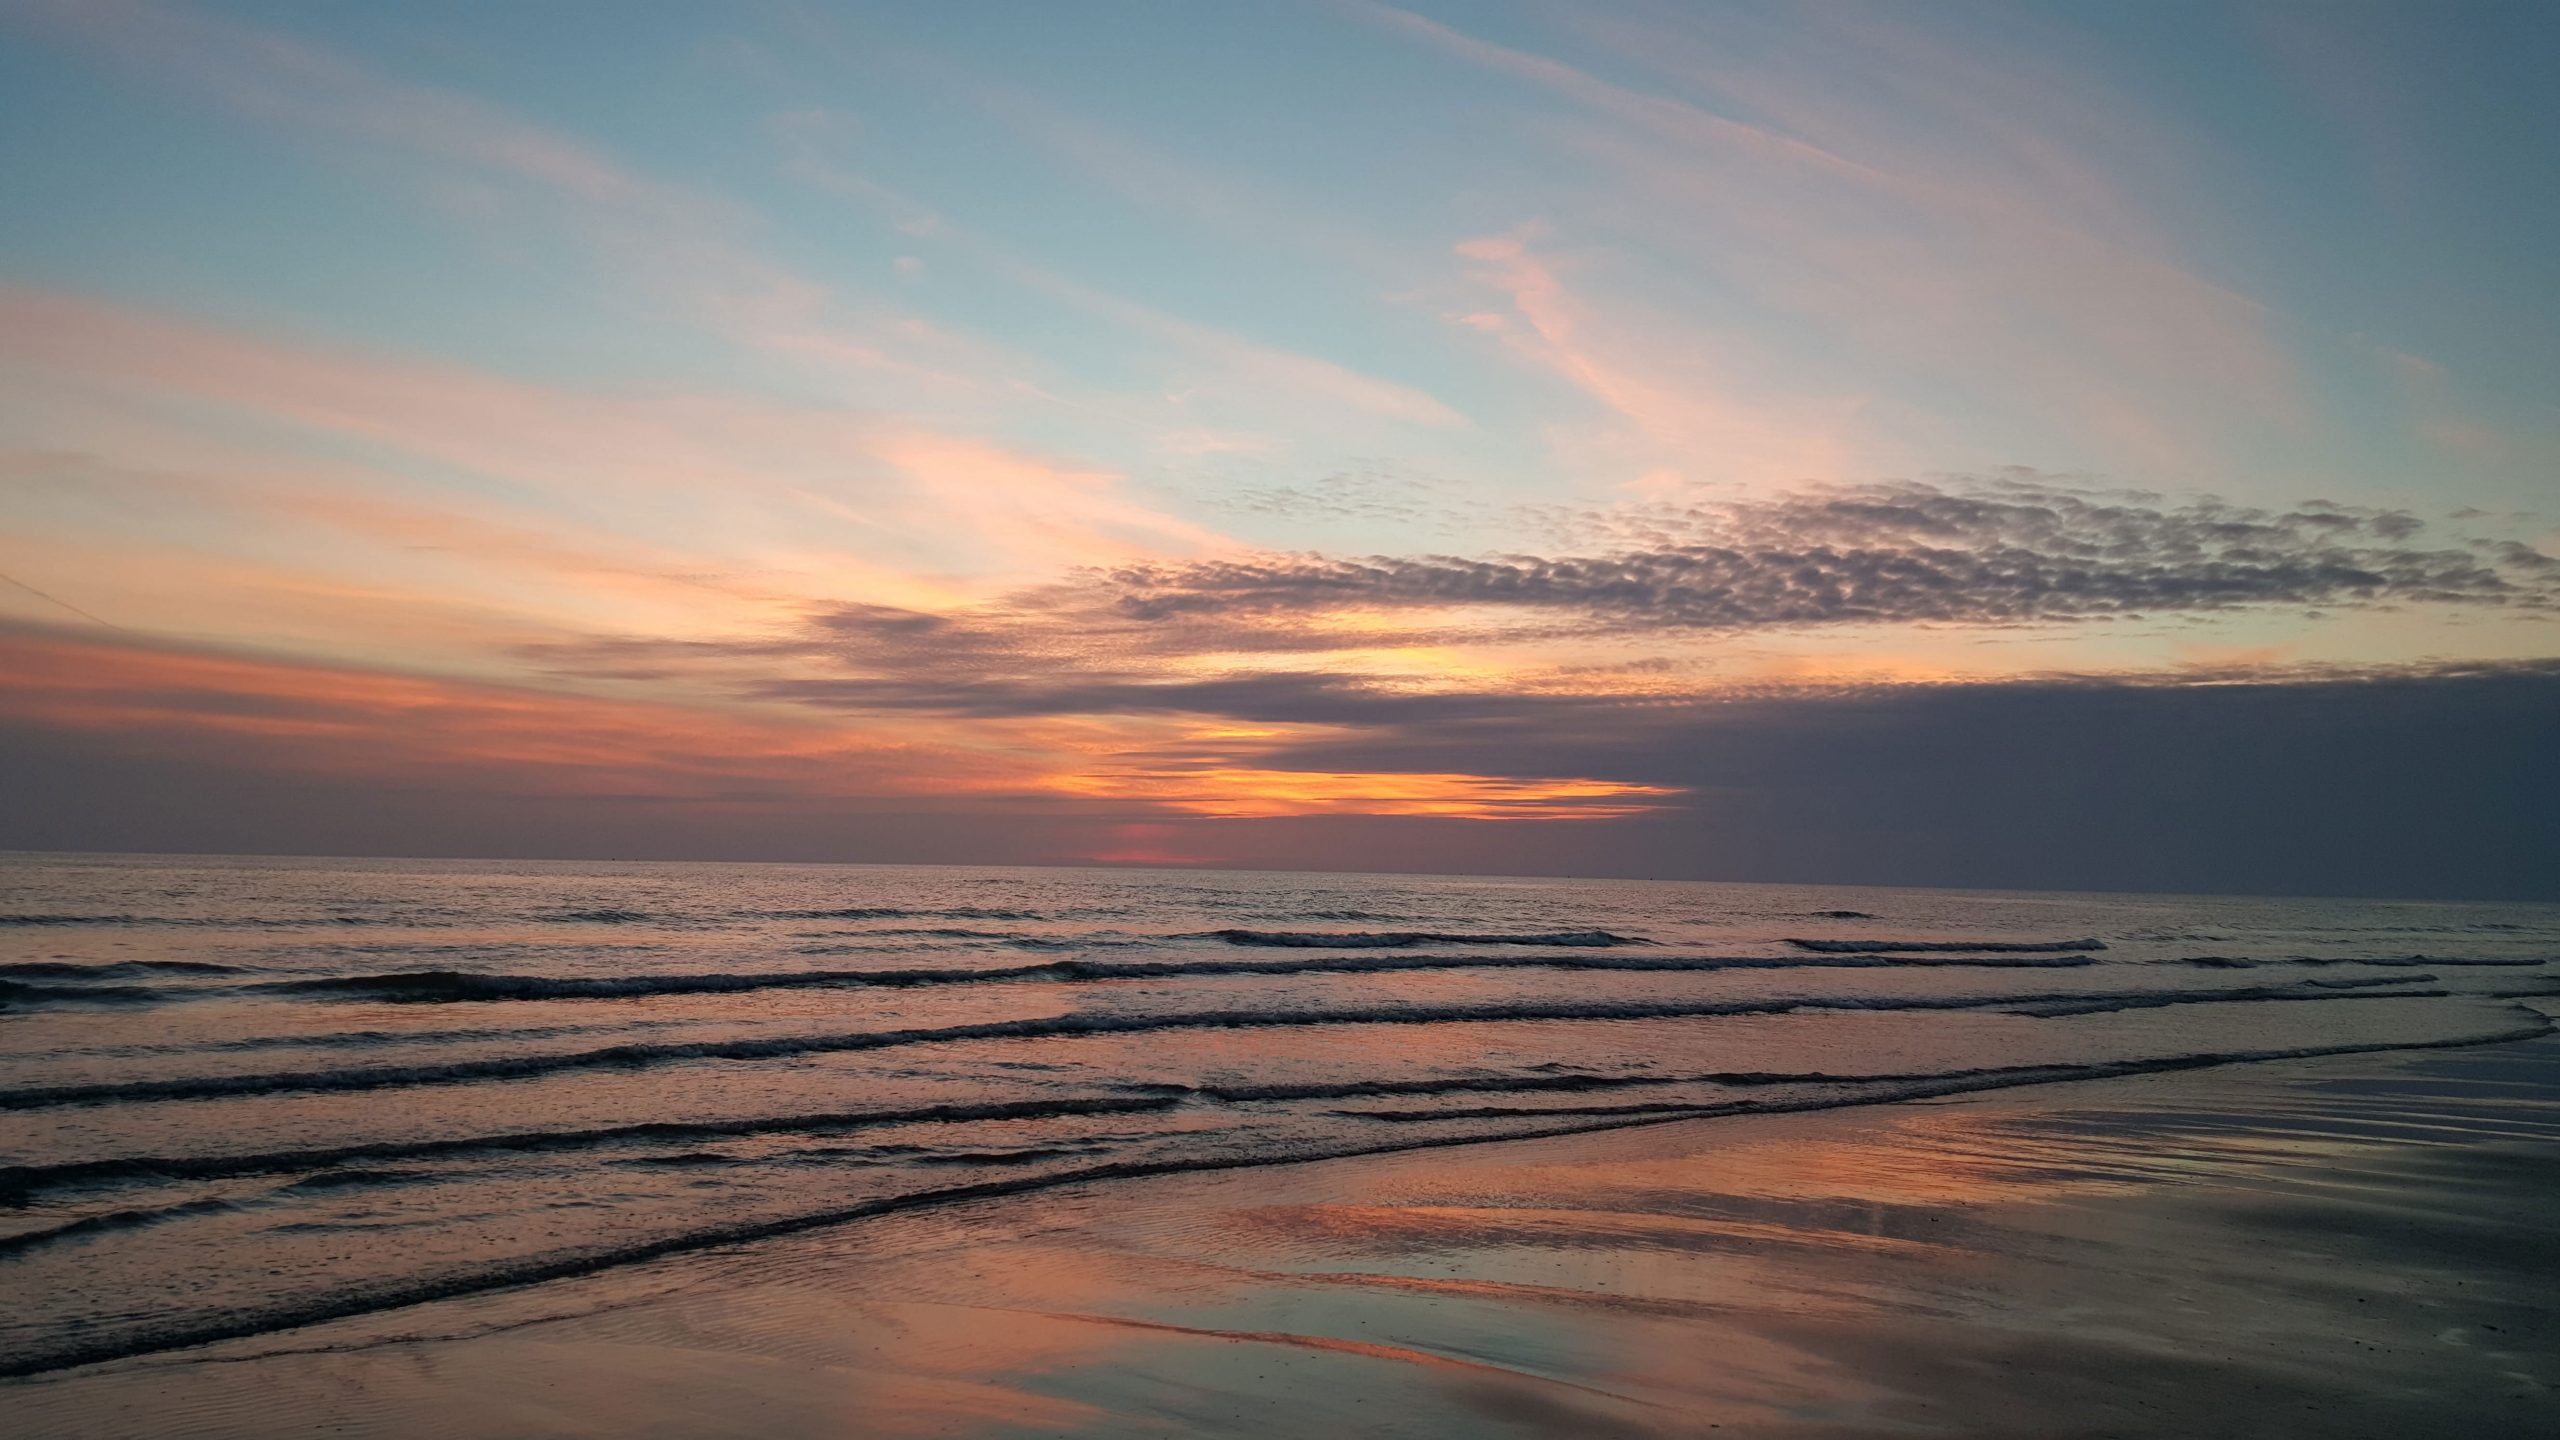 Nederland wallpaper, sun, sand, sea, beach, sunset, sky, water, scenics - nature